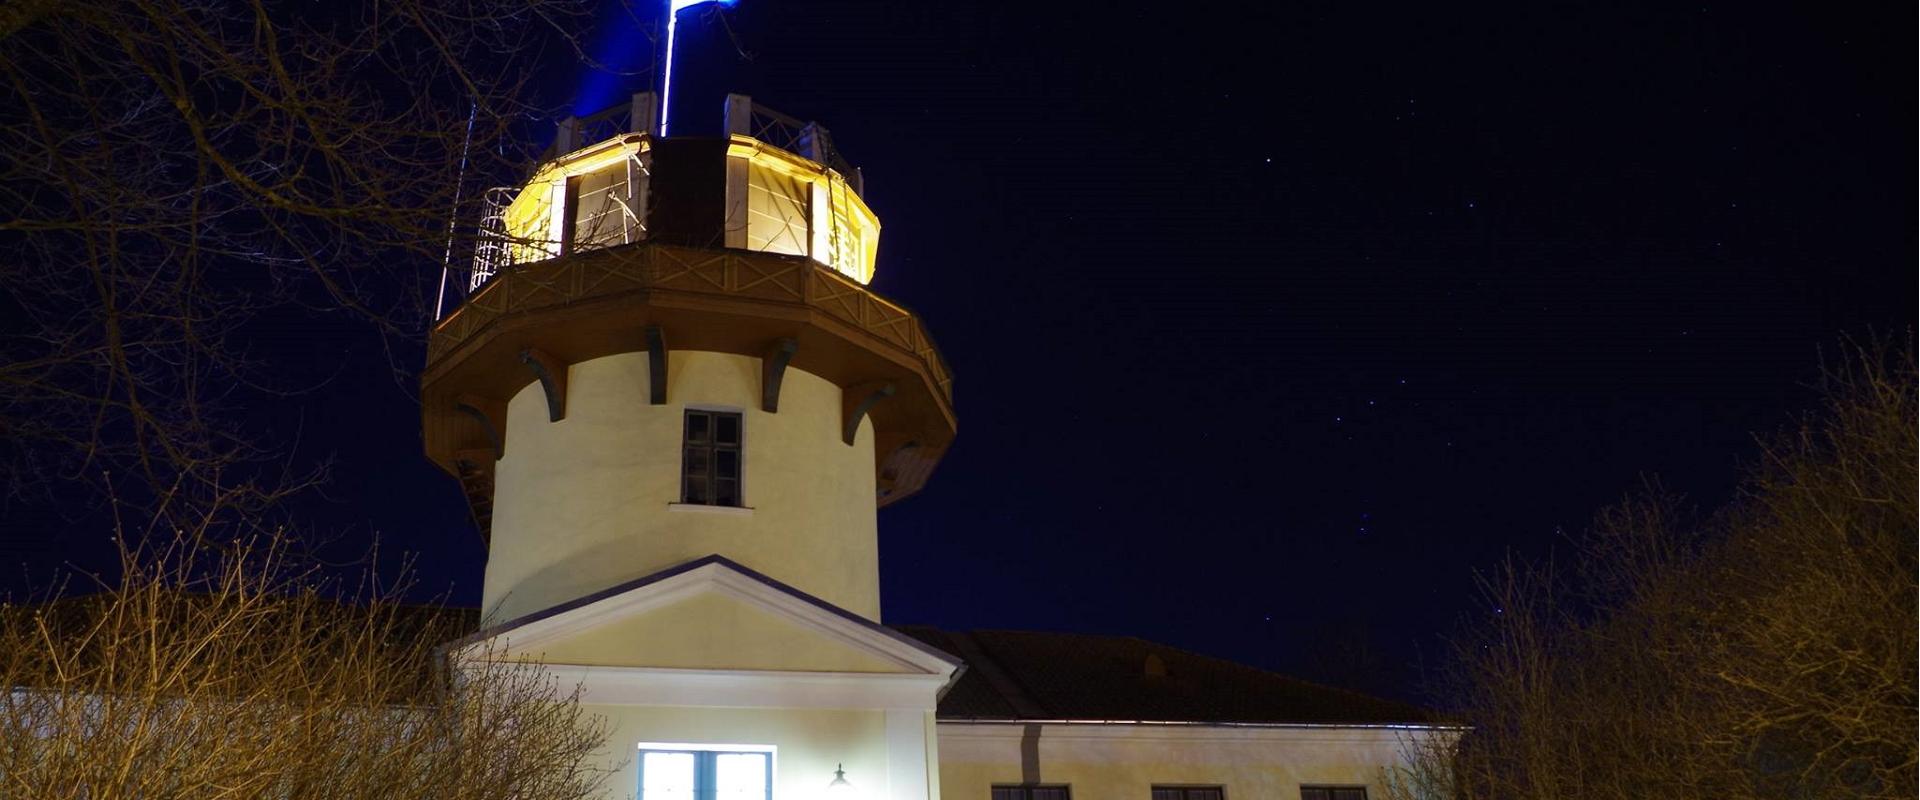 Tartu Old Observatory at night